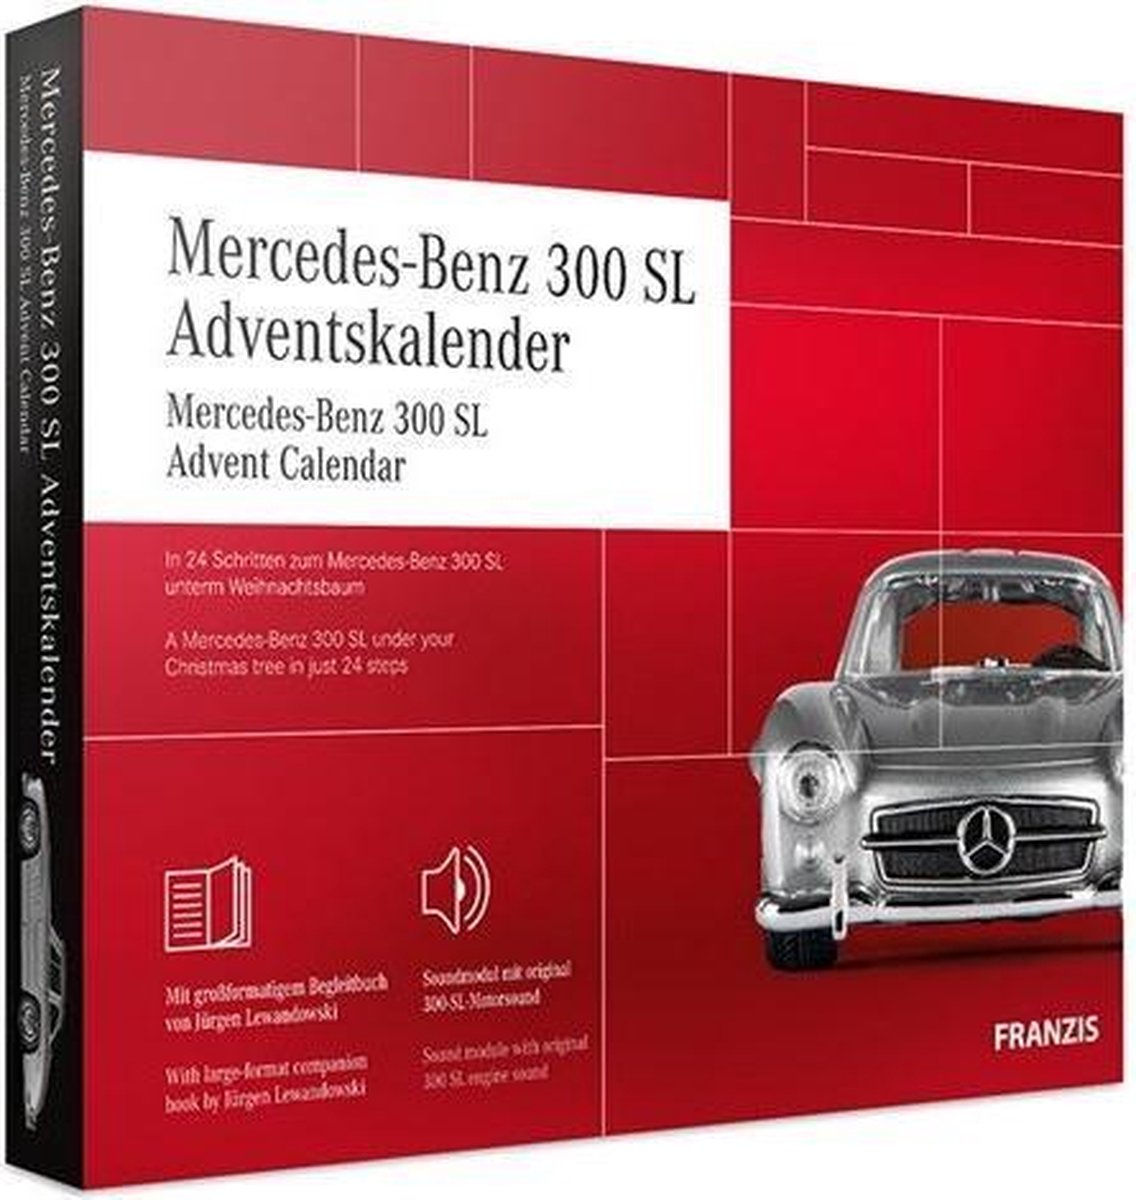 Franzis Mercedes Benz 300 SL Adventskalender